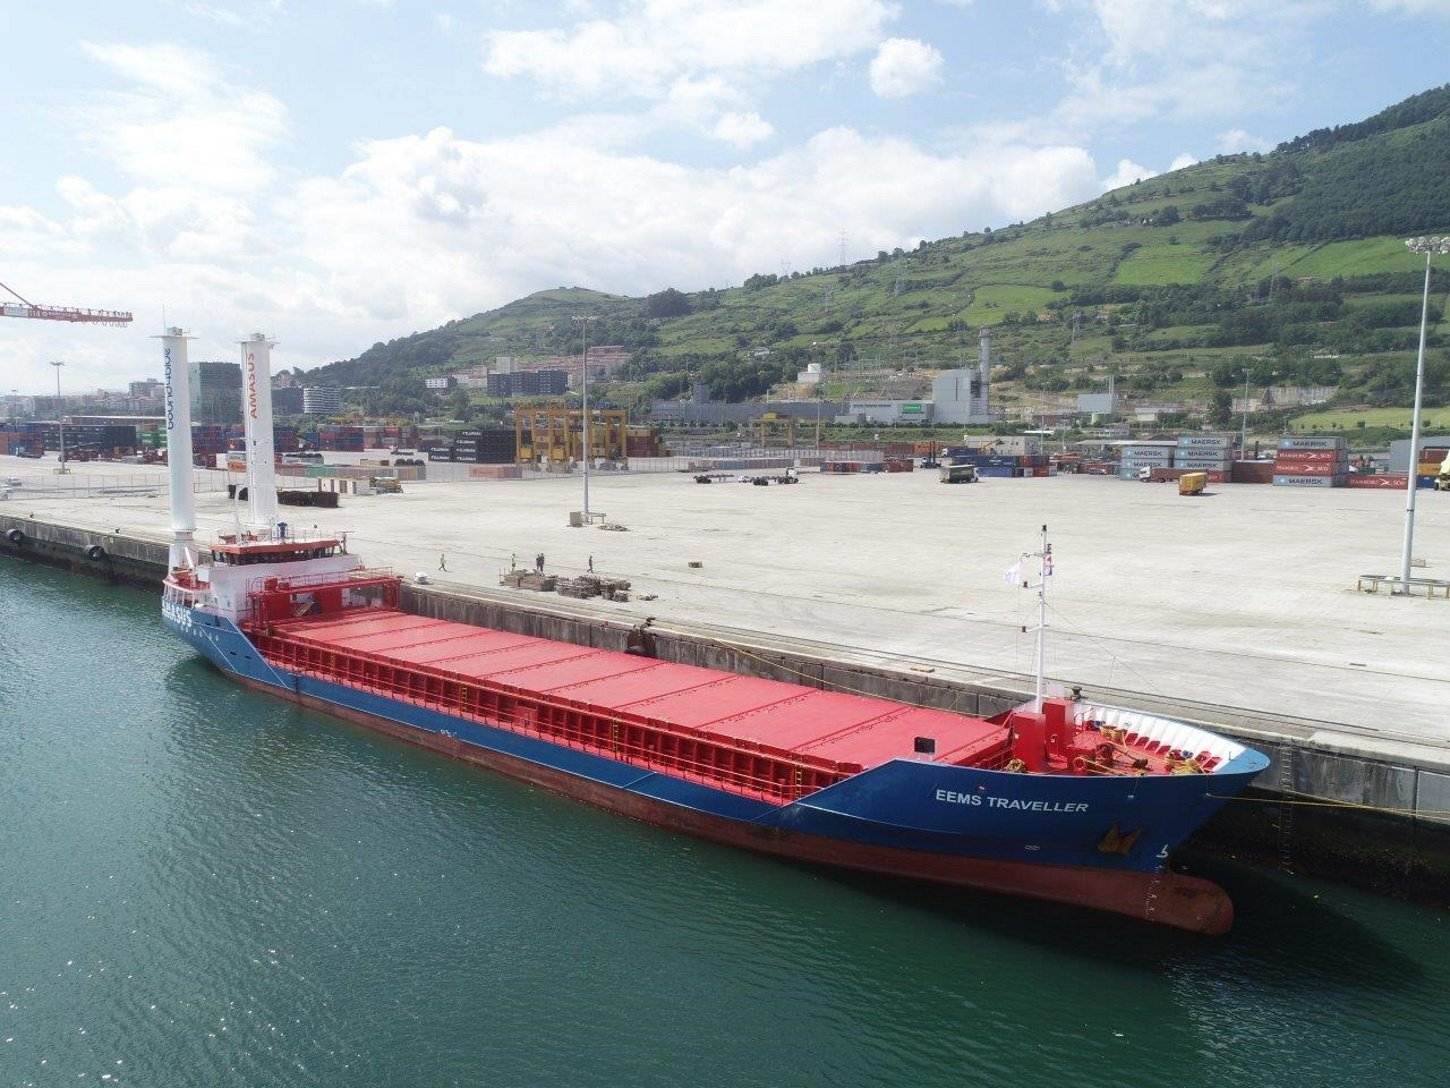 Bound4blue capta 22,4 millones de euros para revolucionar el transporte marítimo